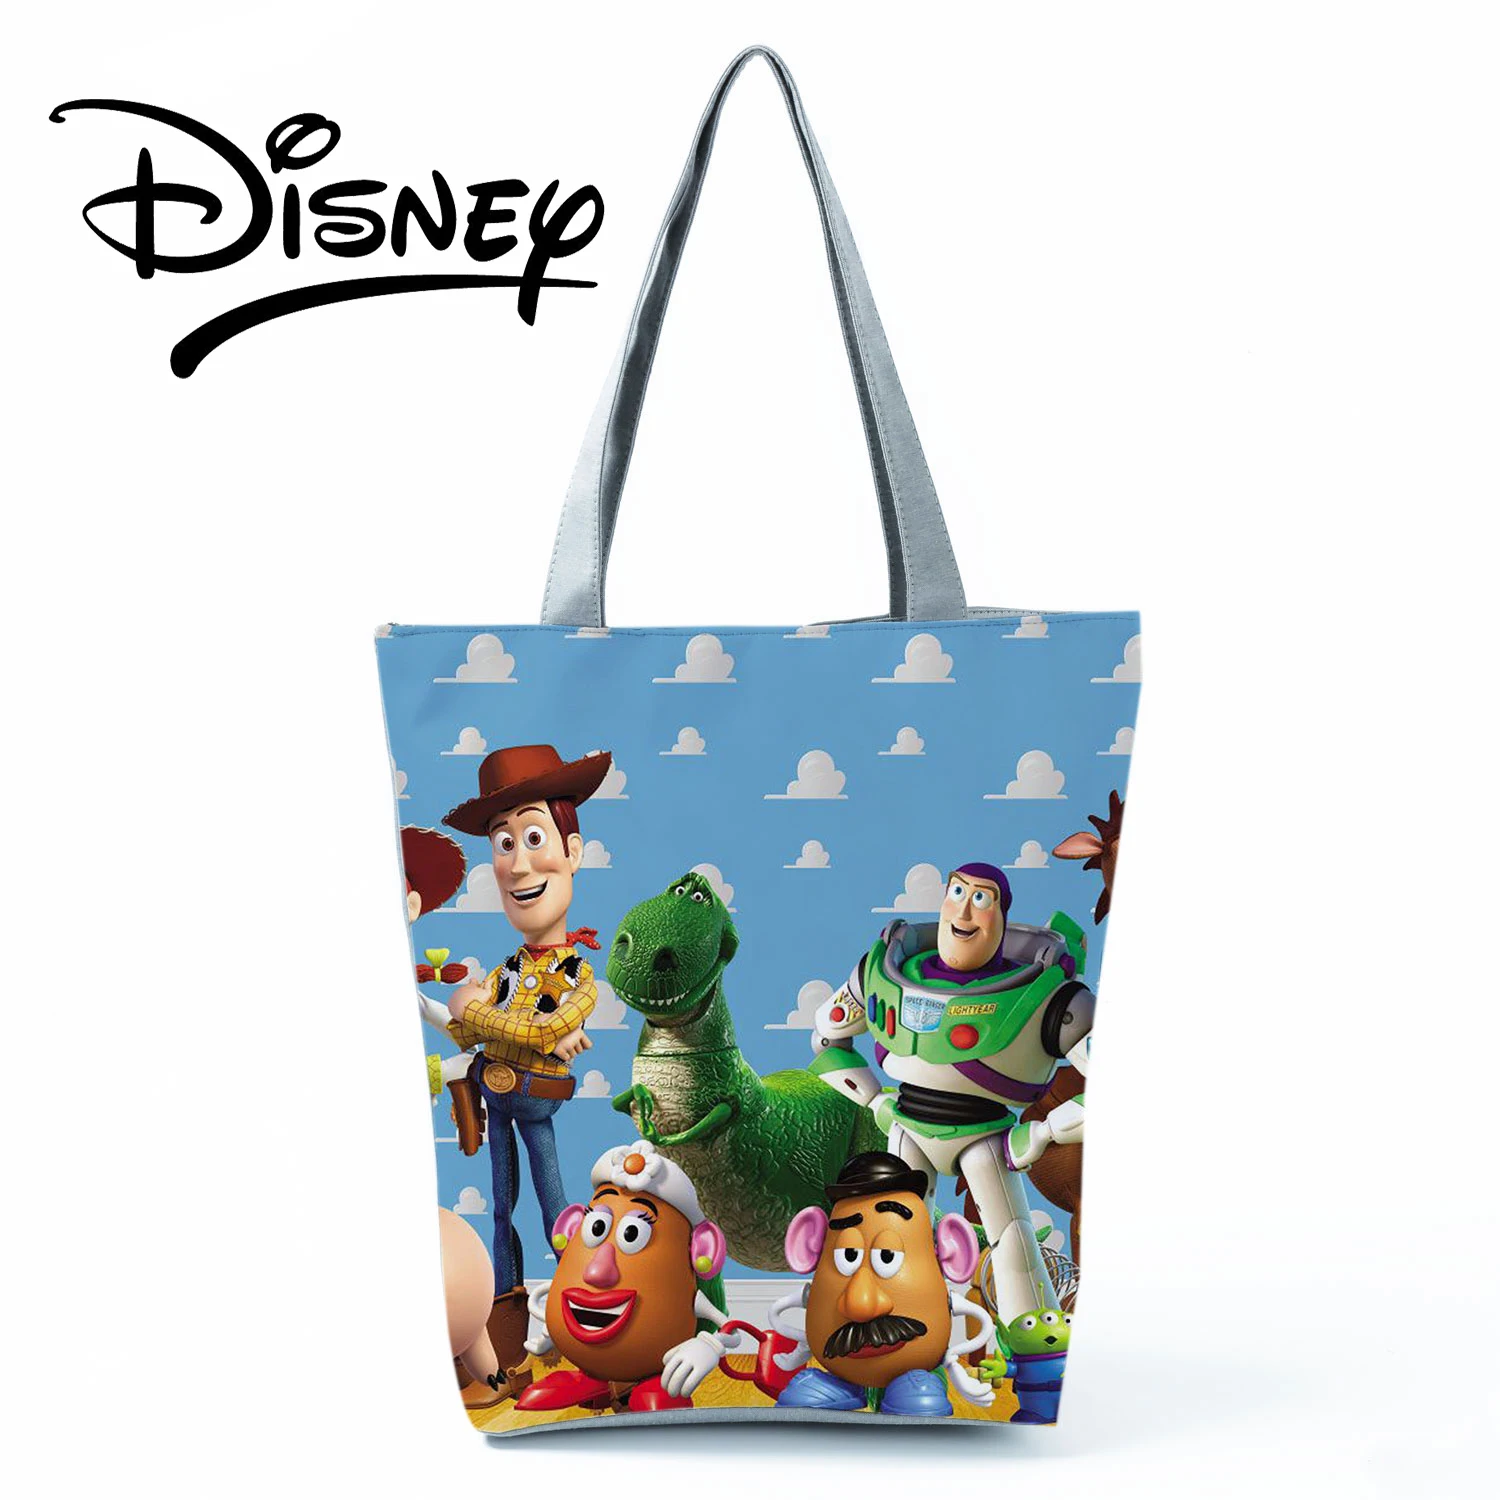 Disney Toy Story Handbags Cartoon Shoulder Bag High Capacity Shoppaing Bag Blue Lady Travel Beach Tote Eco Reusable Storage Bag